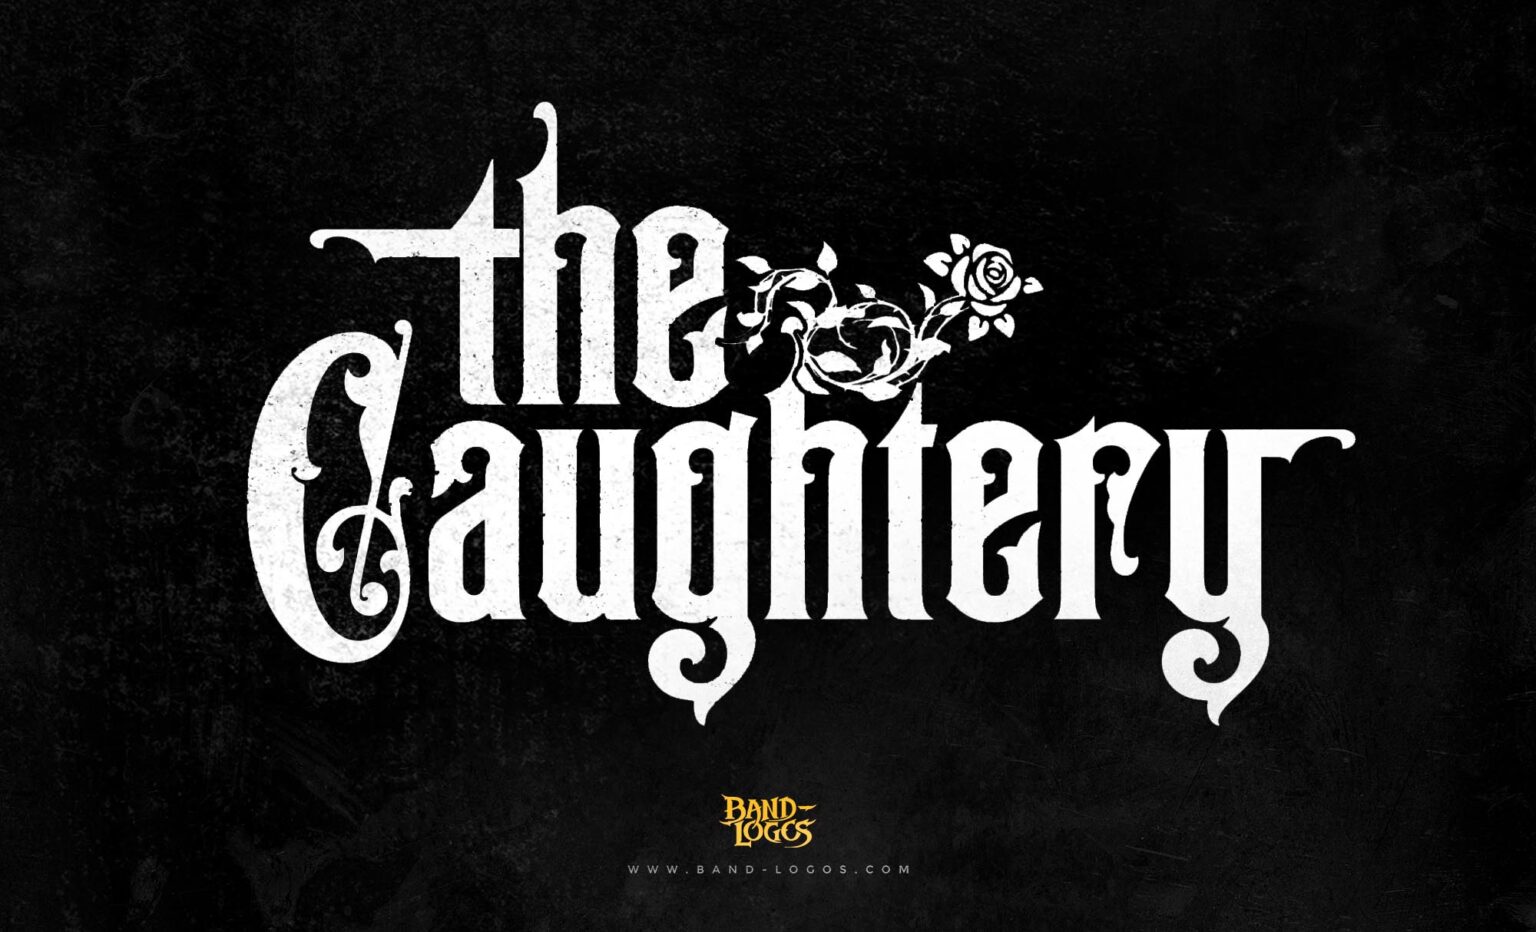 Rock Band Logos - The caughtery